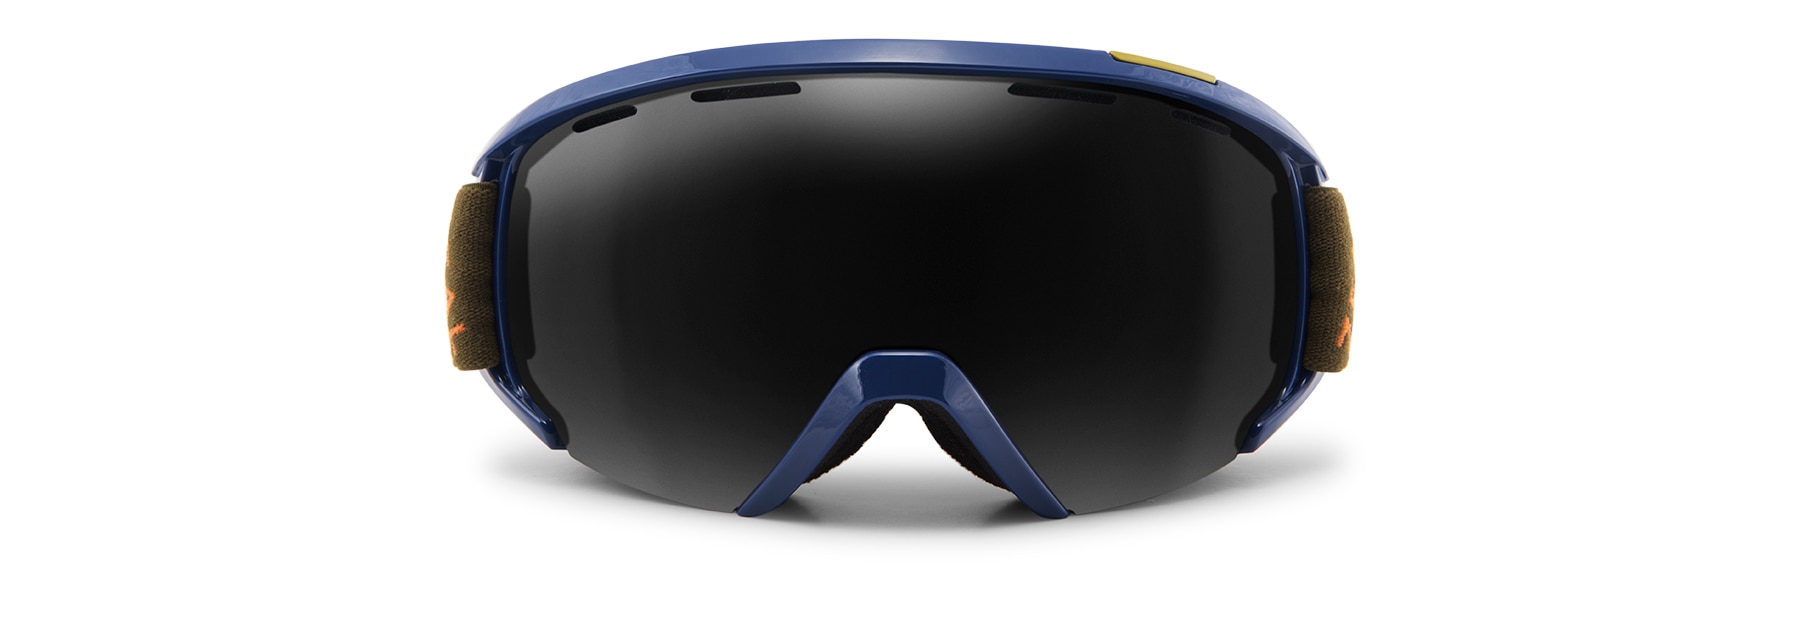 NEW Zeal Slate Goggles Highland Tartan Polarized Automatic lens MSRP $259 